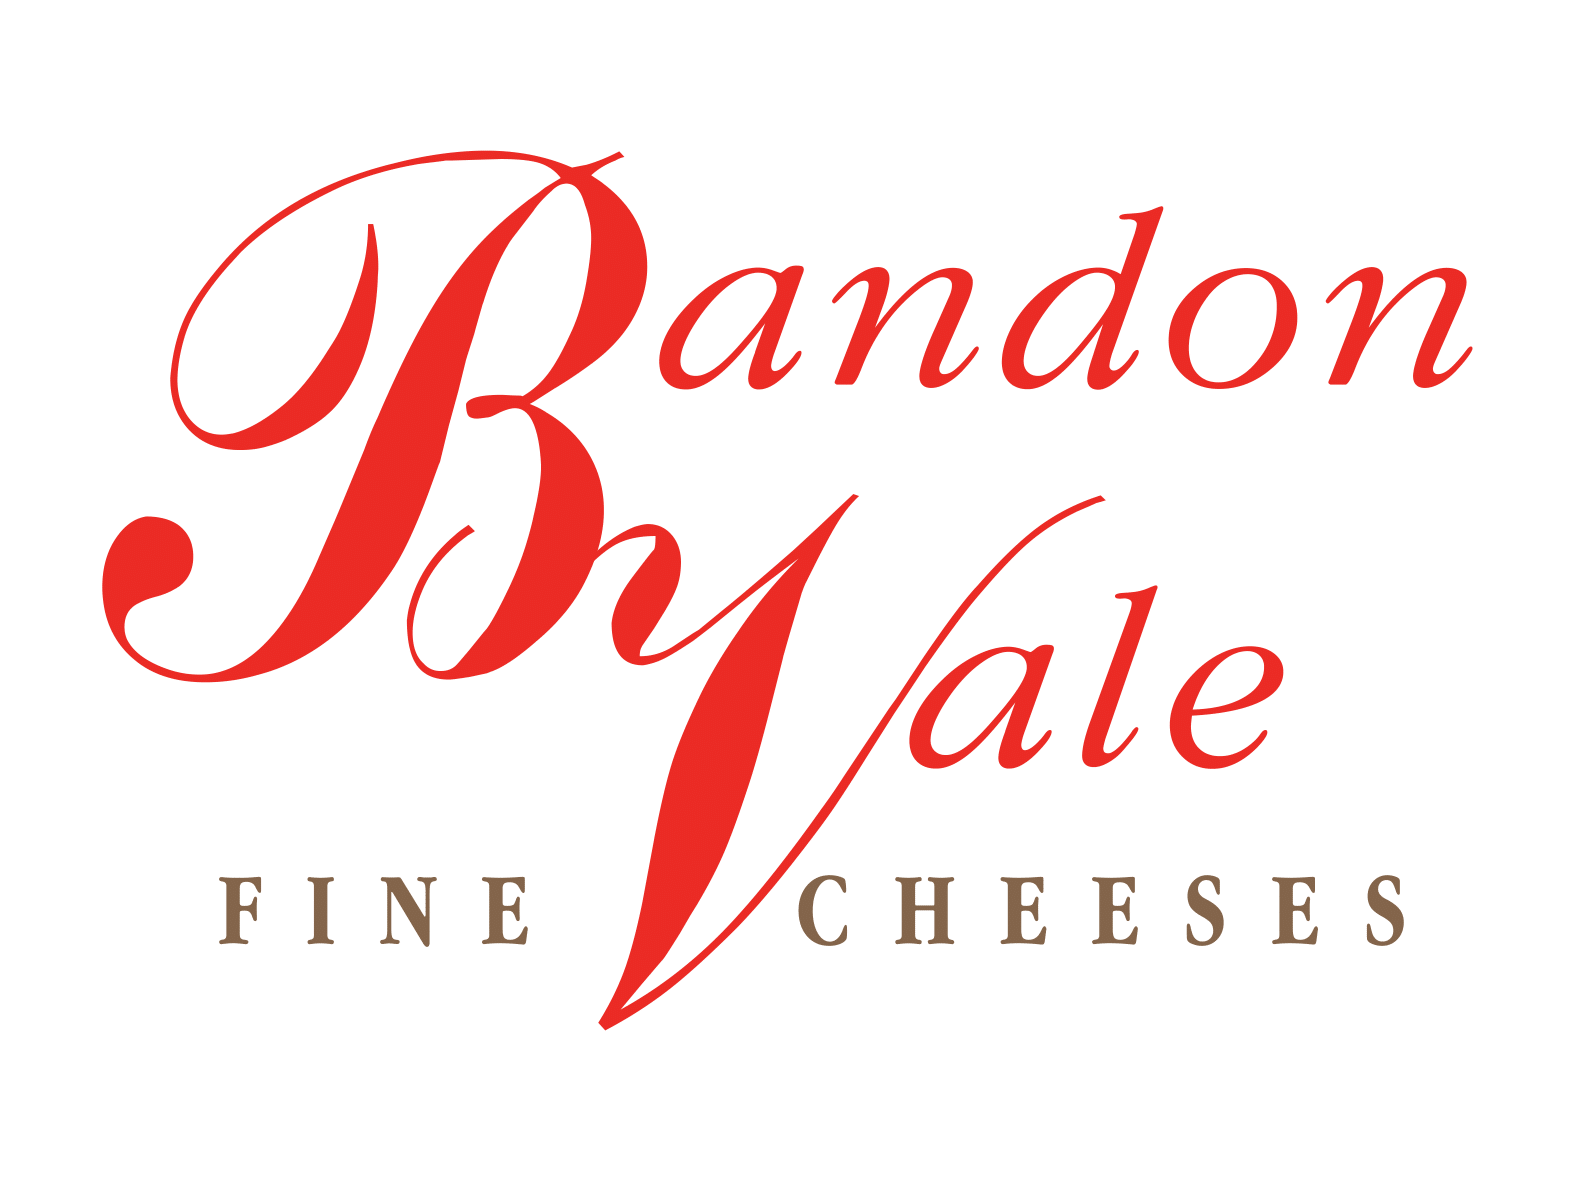 Bandon Vale Cheese